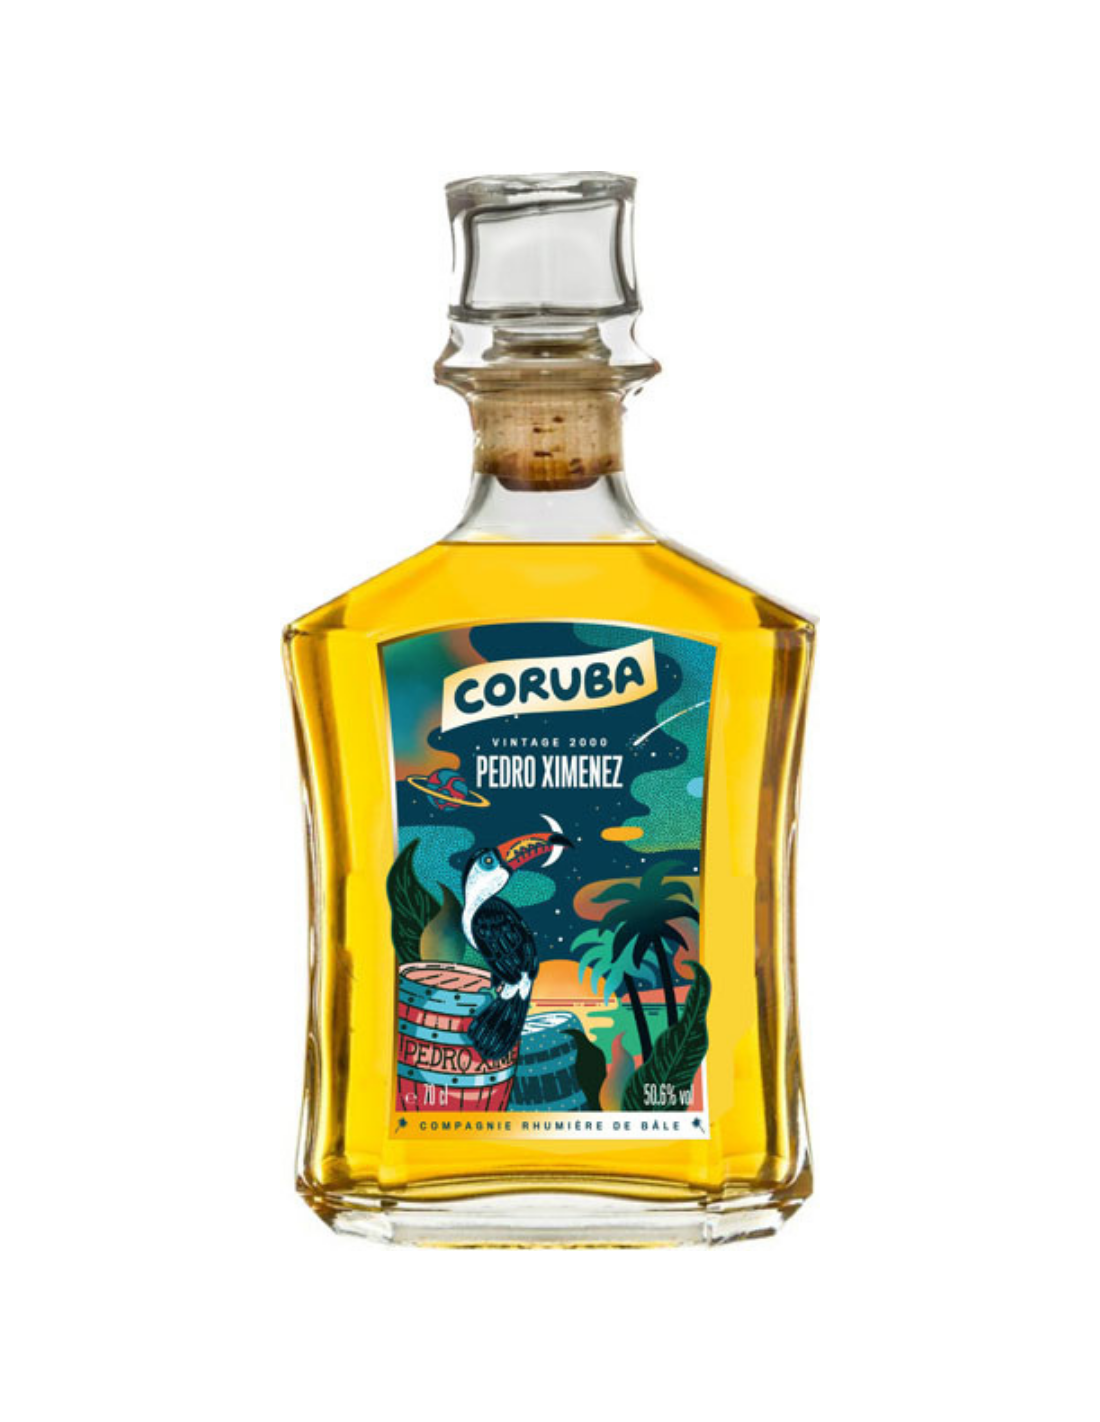 Rom Coruba Pedro Ximenez Vintage 2000, 50.6% alc., 0.7L, Jamaica alcooldiscount.ro